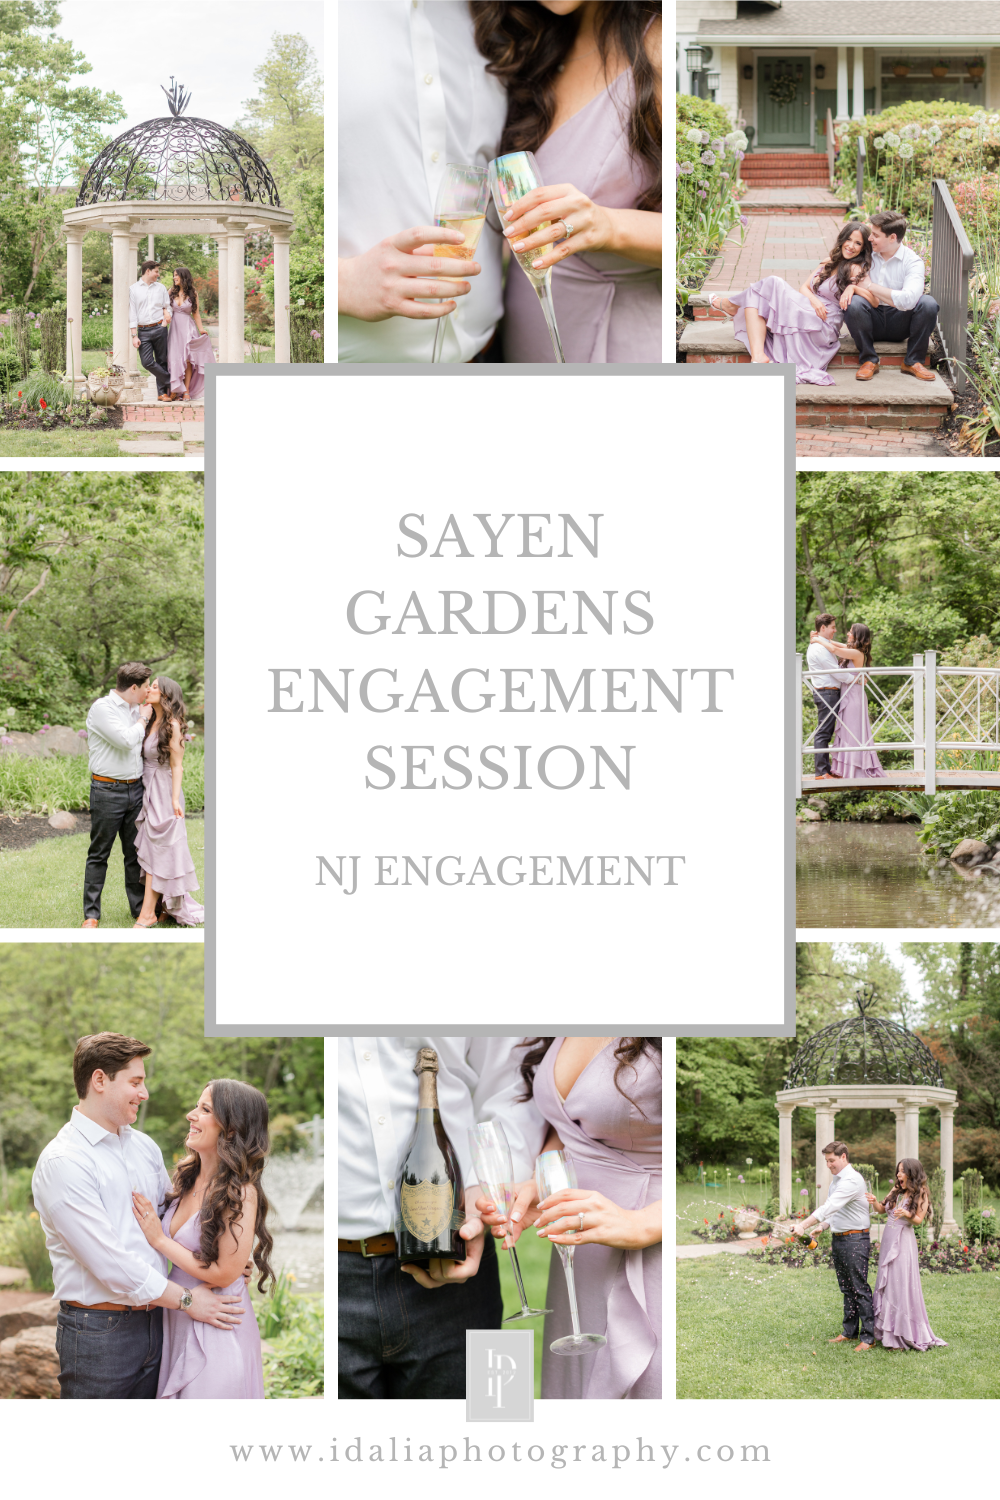 Sayen Gardens Engagement Session in the Spring in Hamilton NJ with Idalia Photography, NJ wedding photographer